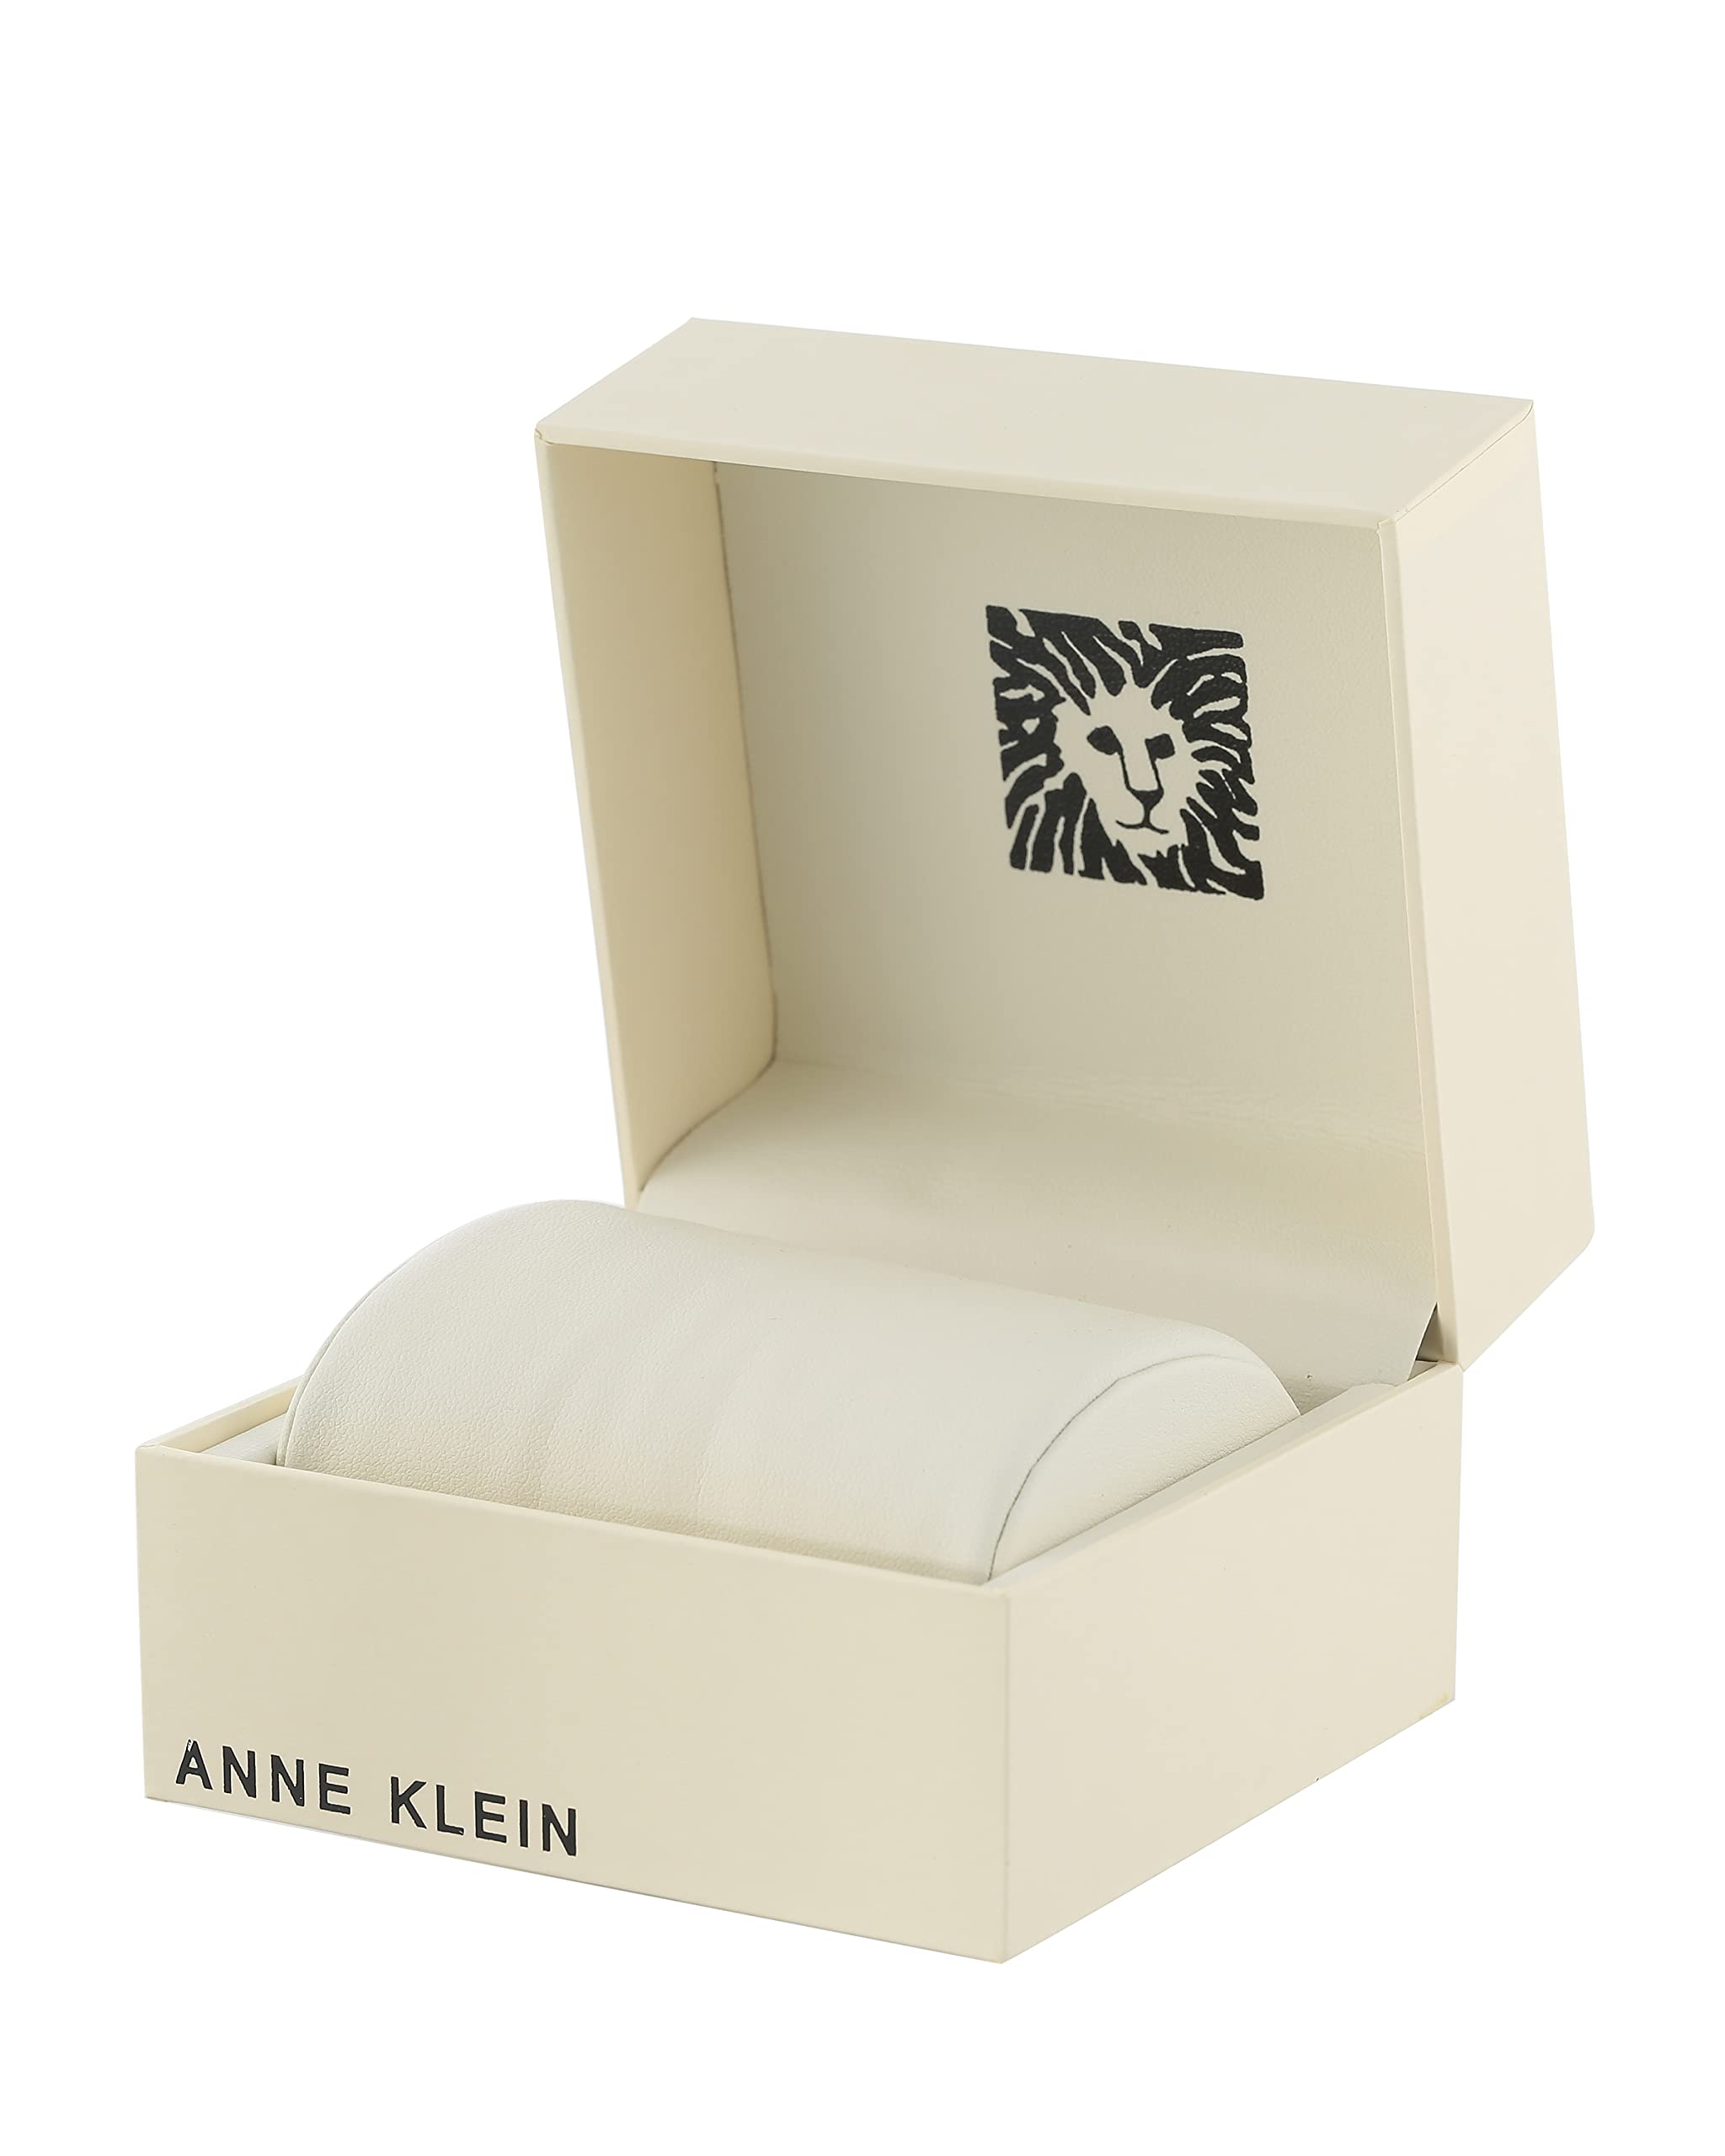 Anne Klein Women's Glitter Accented Bangle Watch and Bracelet Set, AK/3296